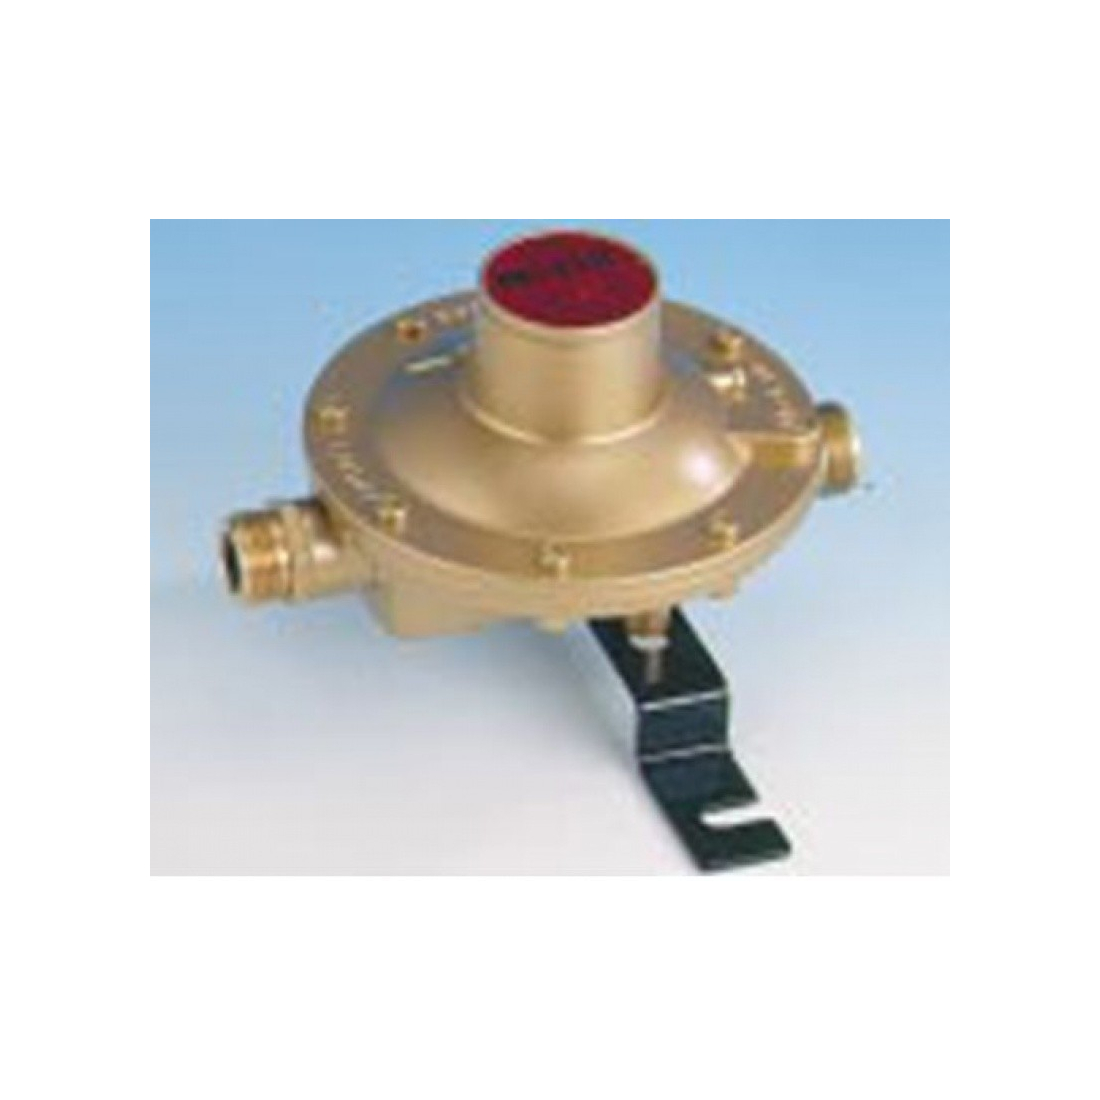 Adjustable regulator Butane Propane 111 Mbars C06-N0426B53 Clesse industries¨ Gas Accessories